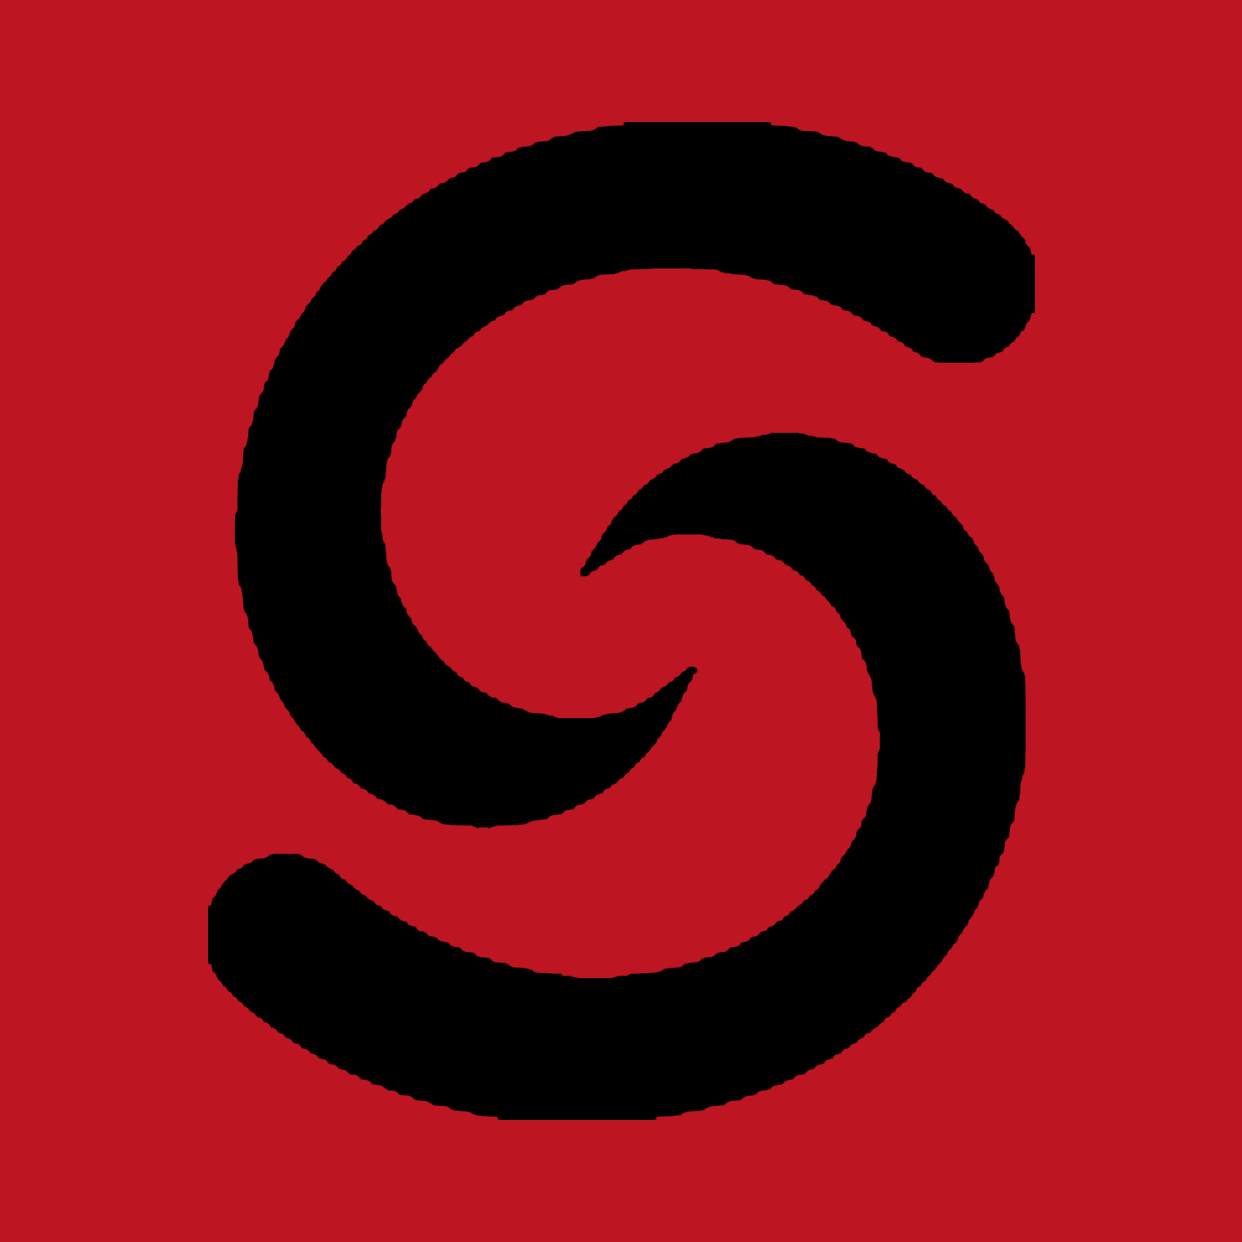 Black and Red S Logo - InSayn Logo InSayn Games Indie Video Game Development